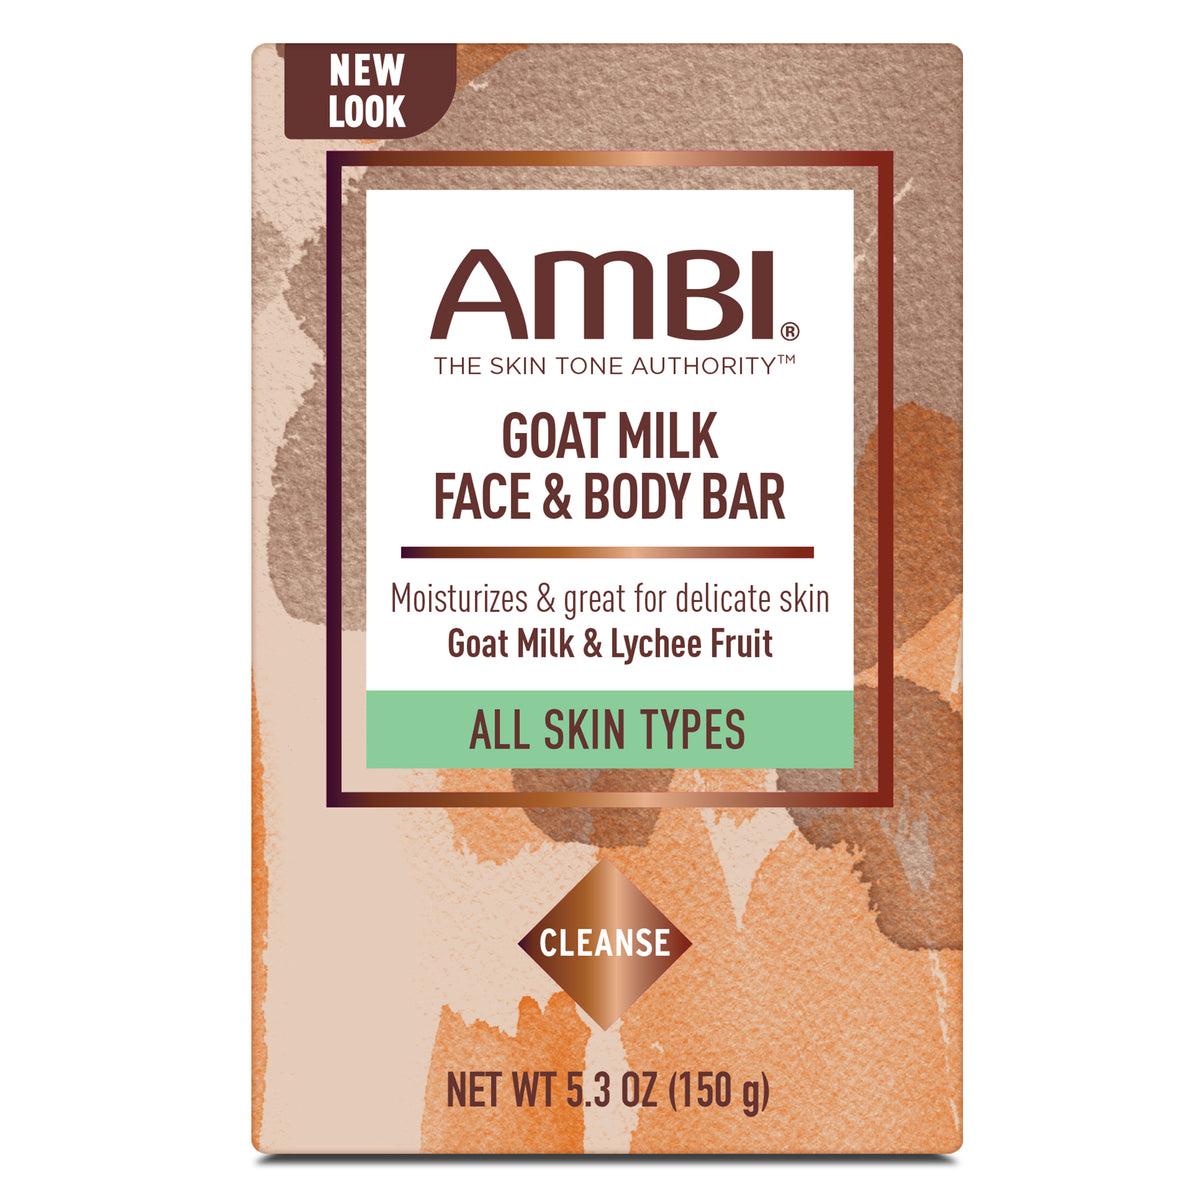 NEW! AMBI Goat Milk Face & Body Bar – Ambi Skincare